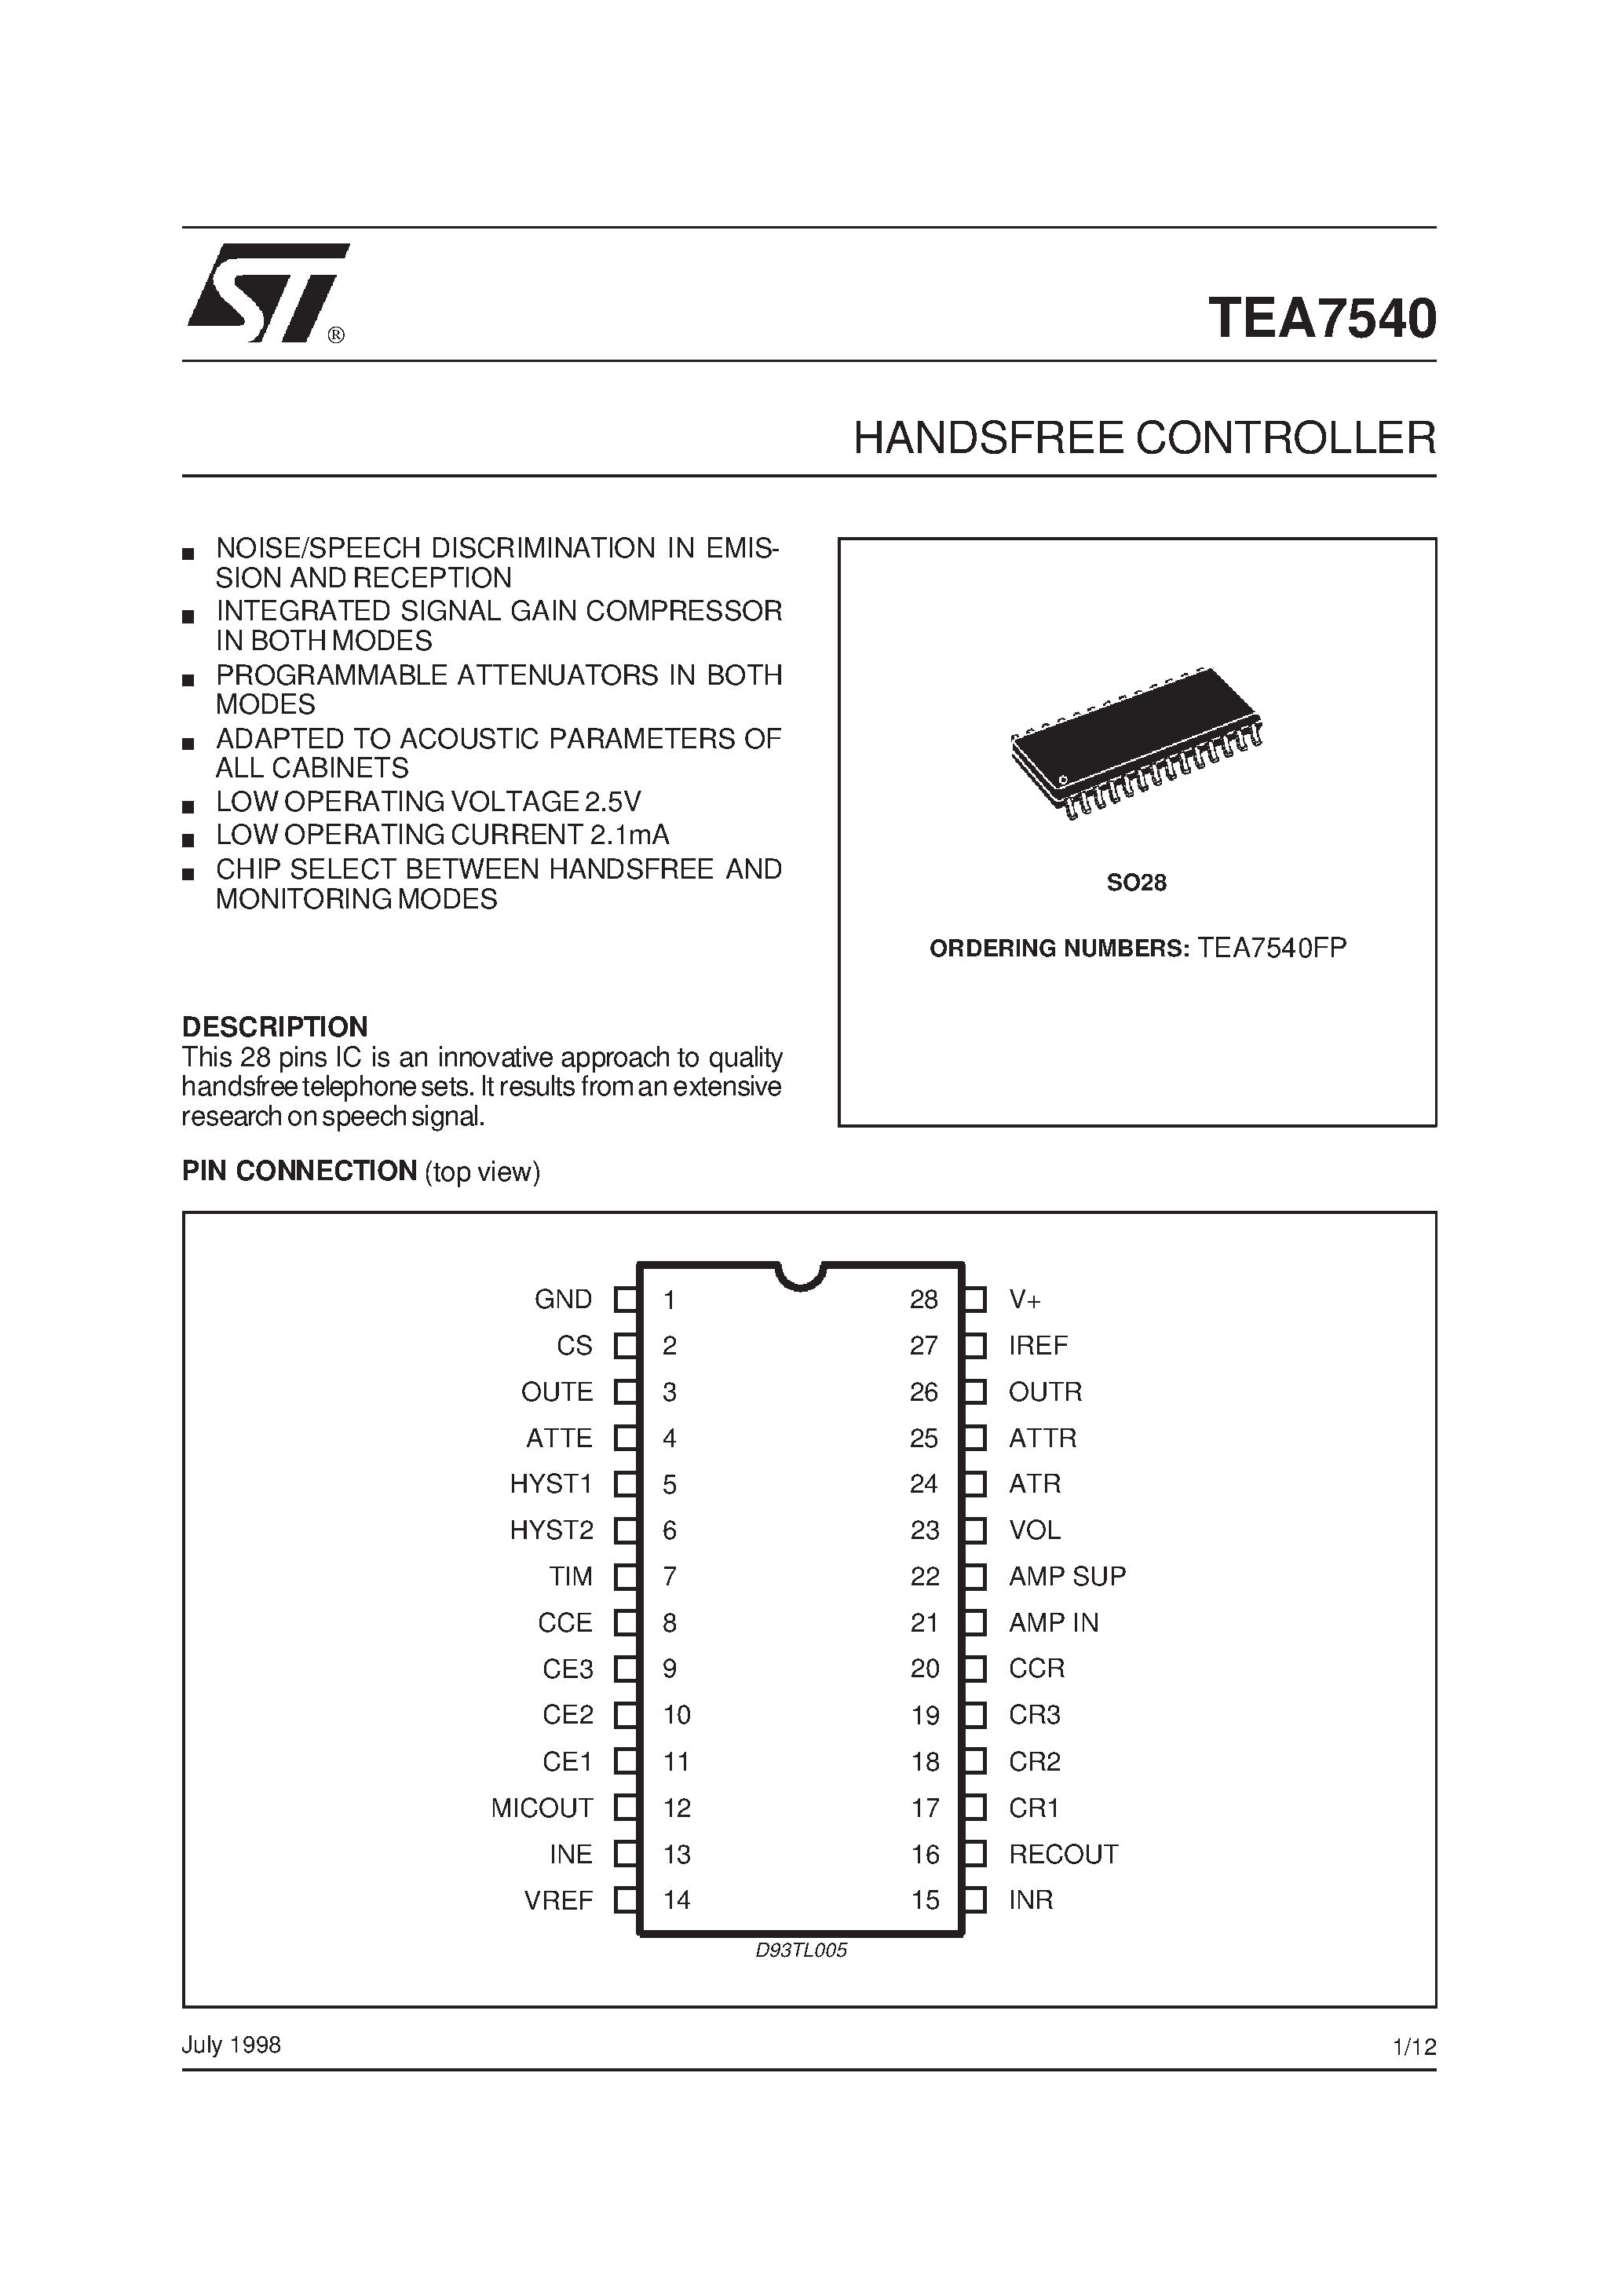 Datasheet TEA7540FP - HANDSFREE CONTROLLER page 1